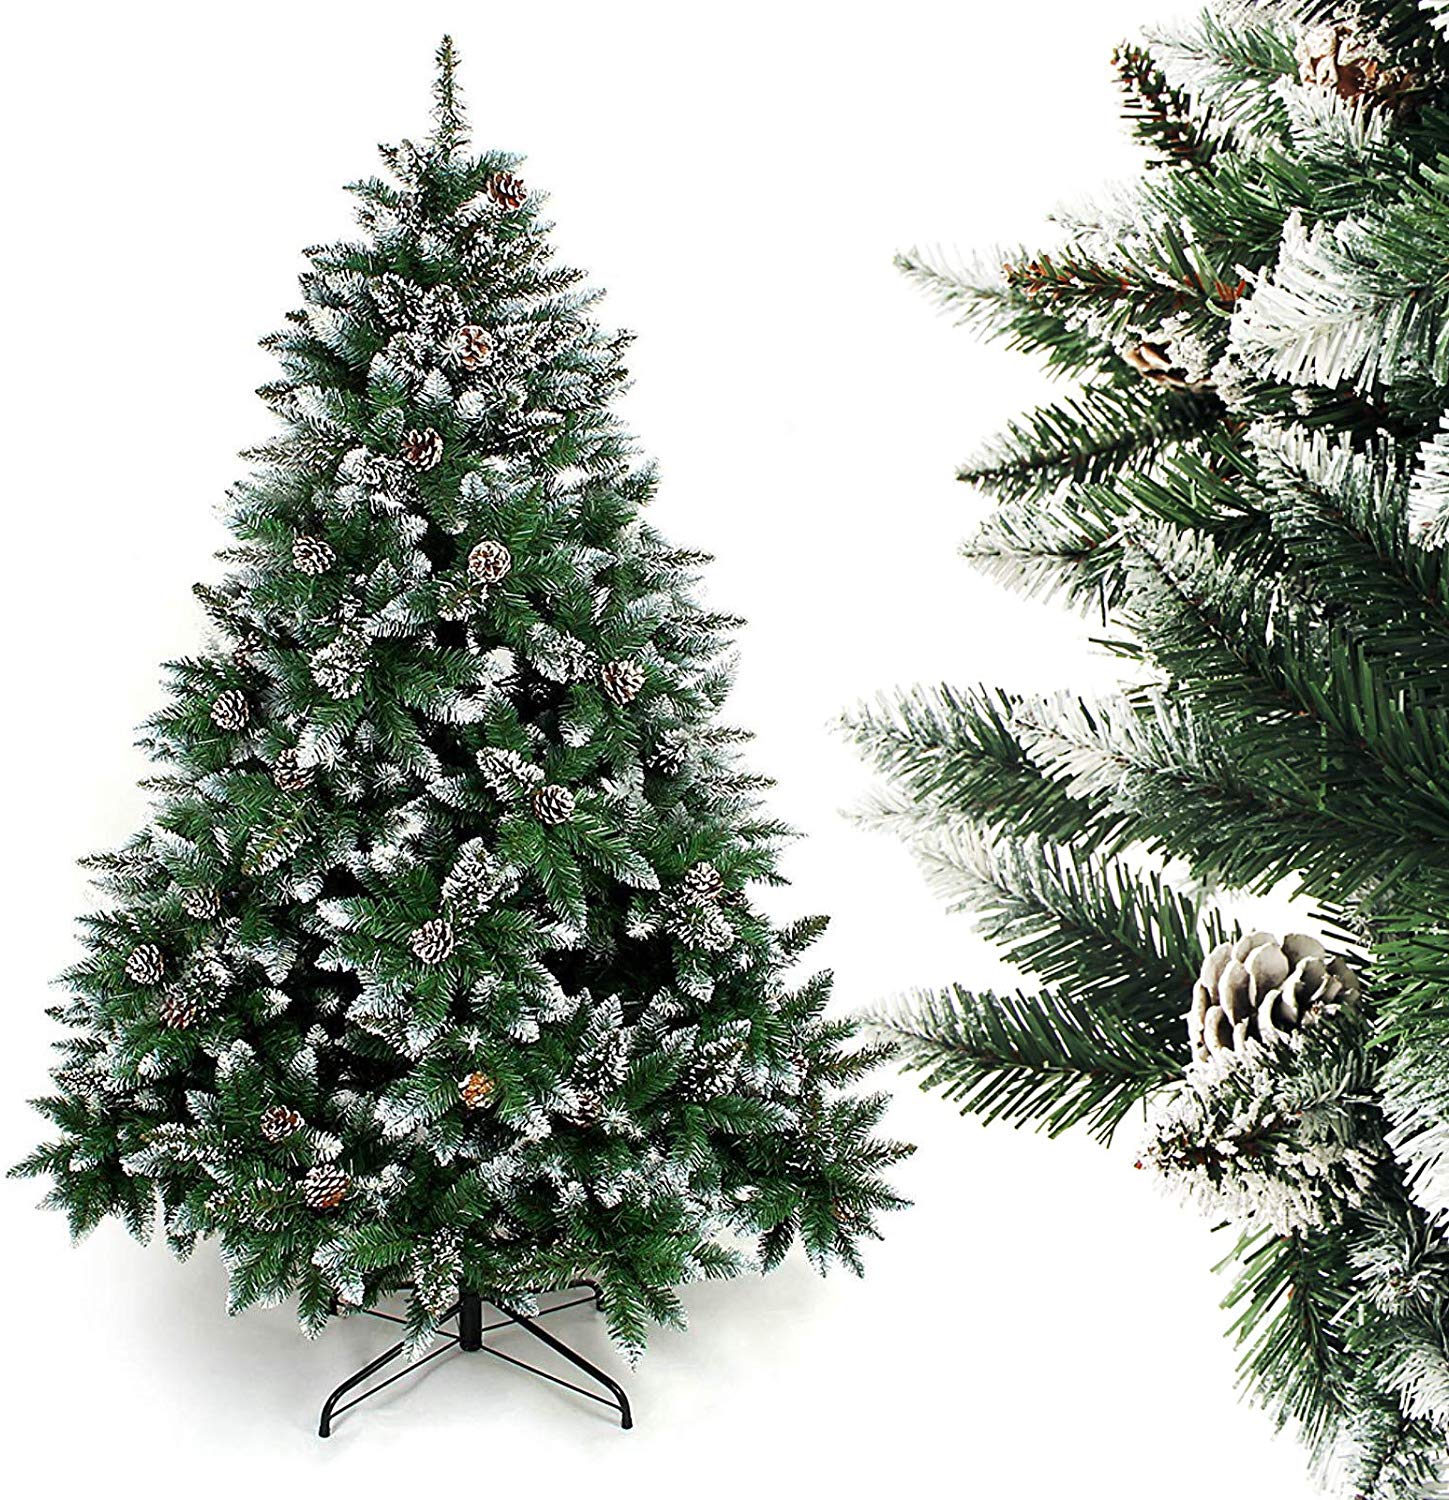 Homde Artificial Christmas Tree